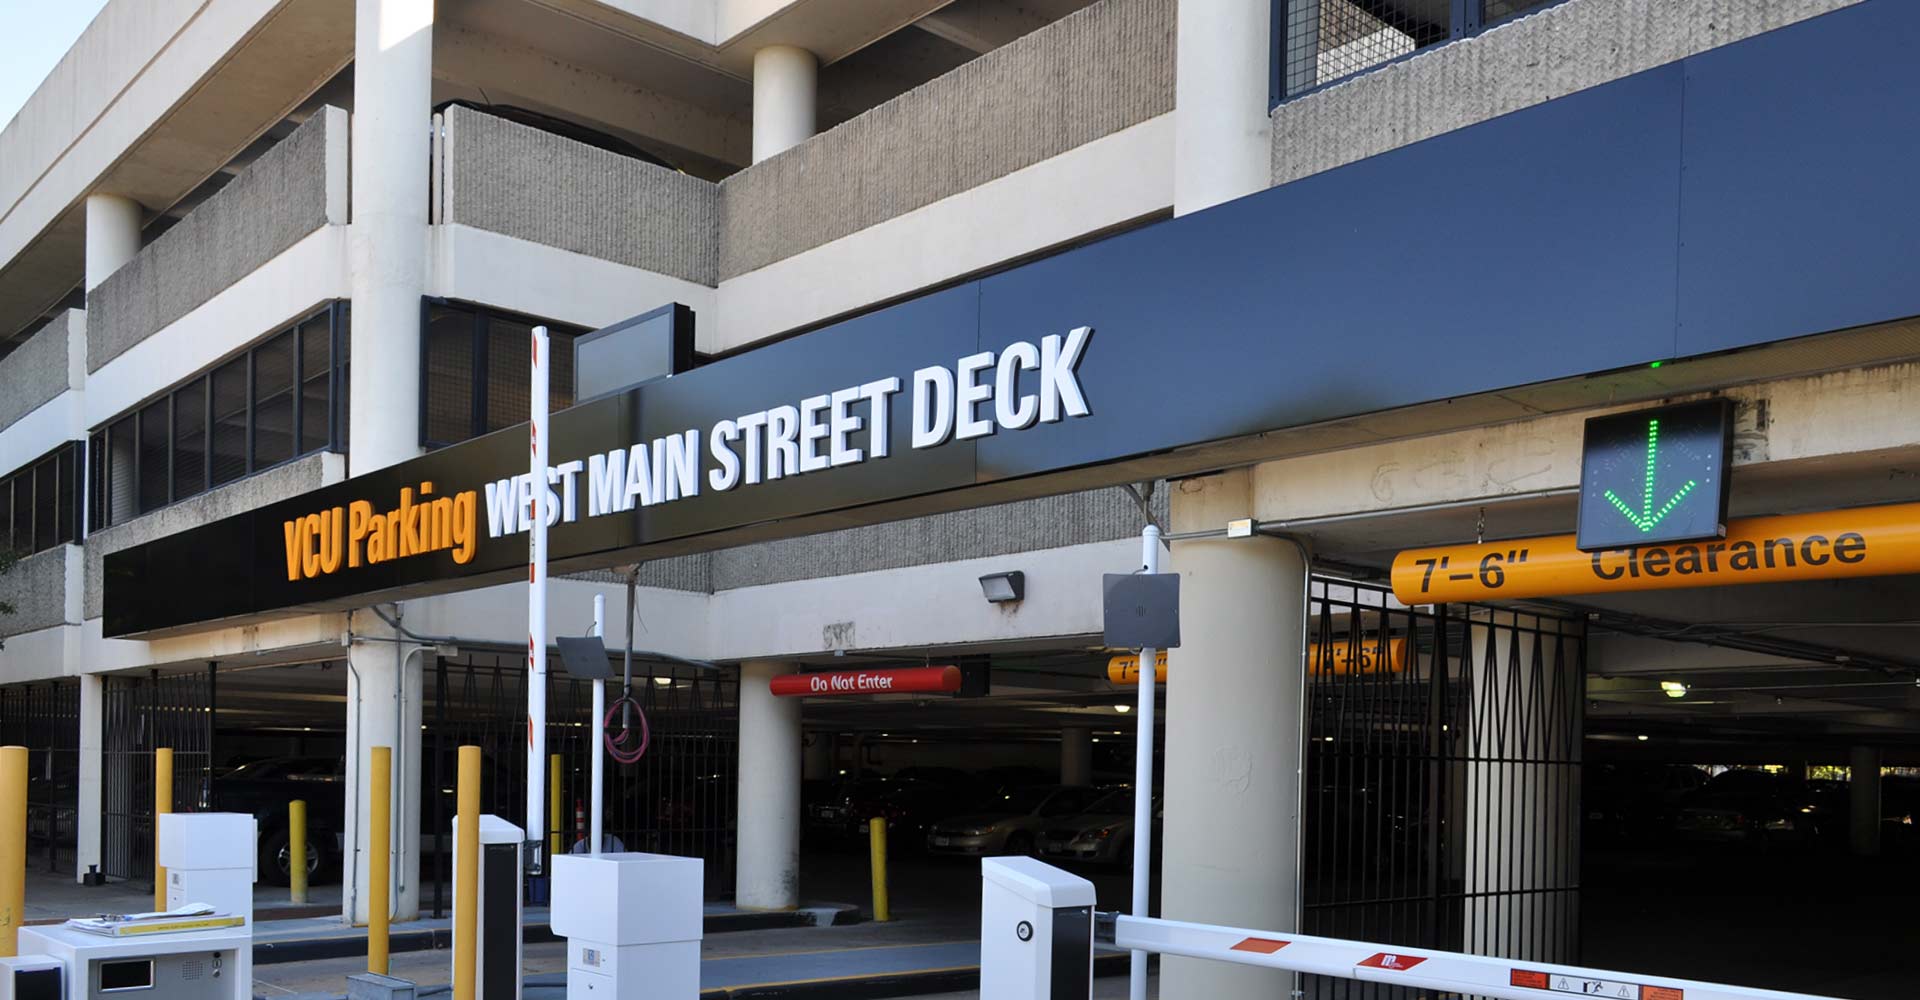 VCU West Main Street Deck